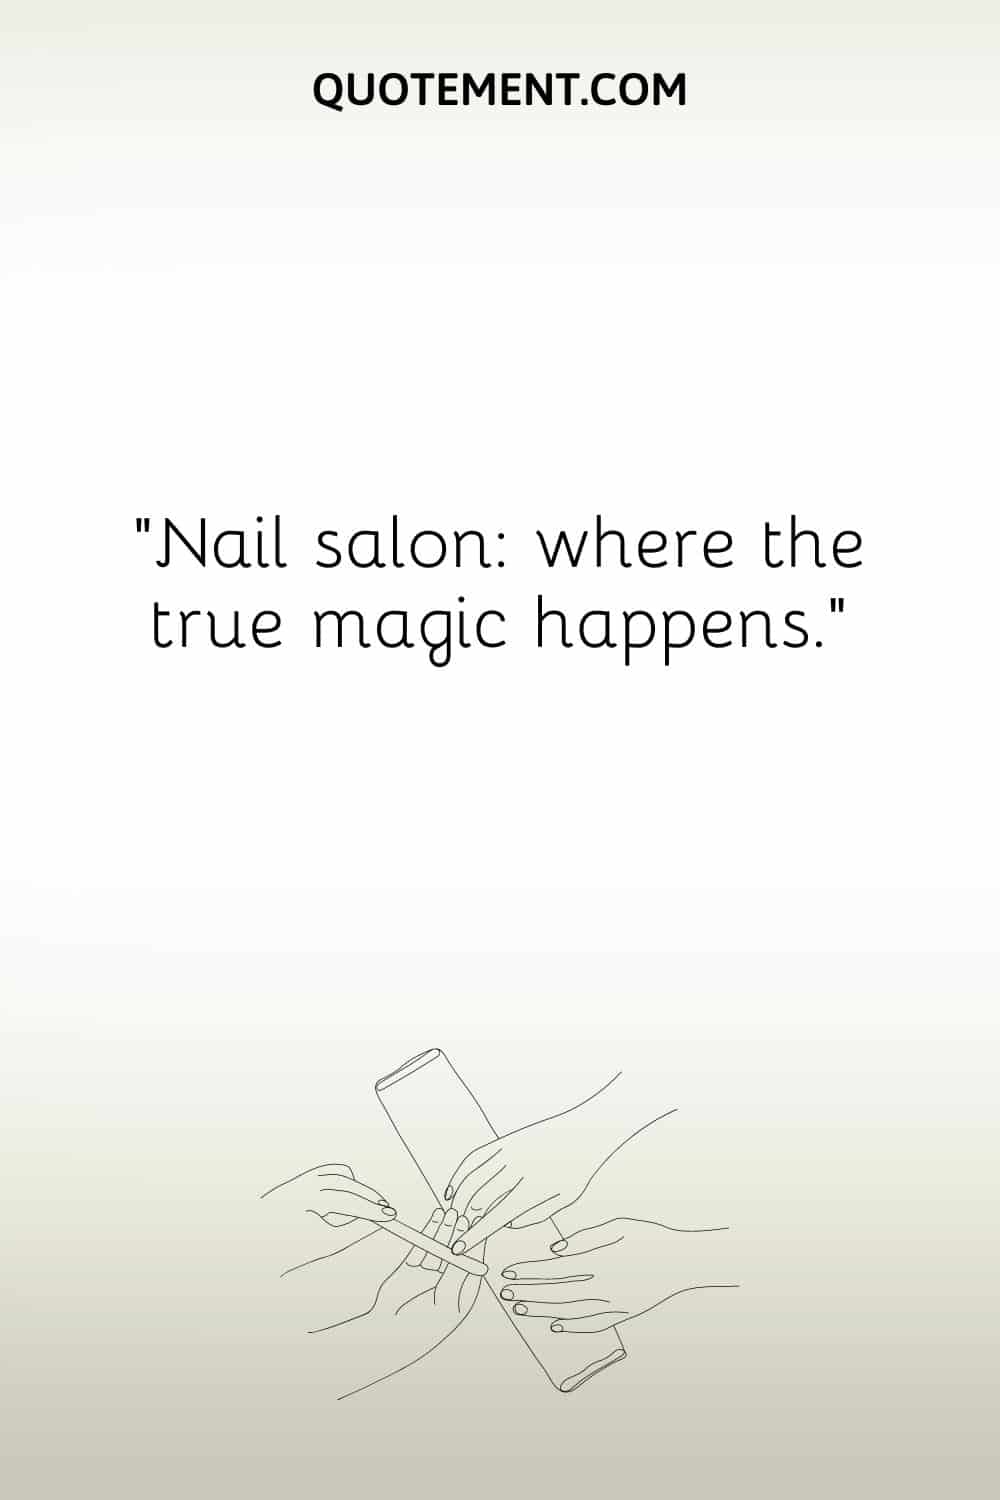 “Nail salon where the true magic happens